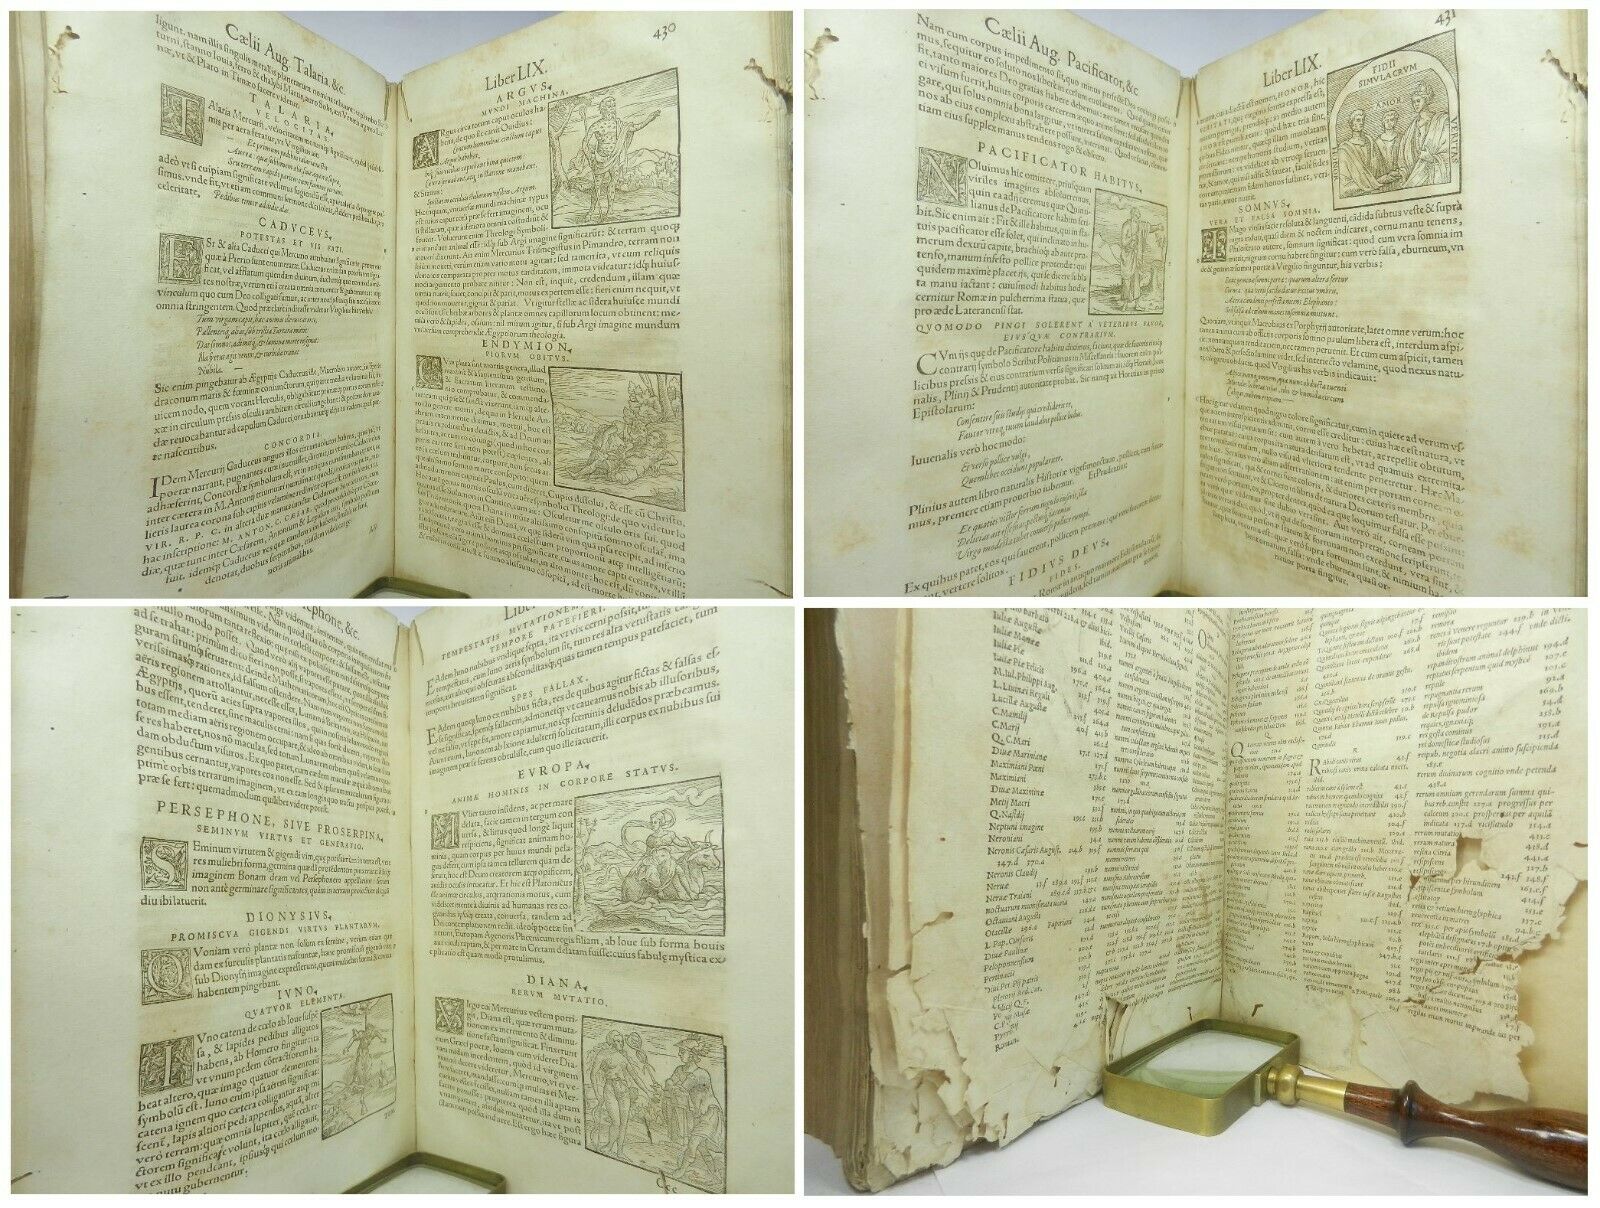 HIEROGLYPHICA SIVE DE SACRIS AEGYPTIORUM 1567 PIETRO VALERIANO, WOODCUT ILLUSTRATIONS